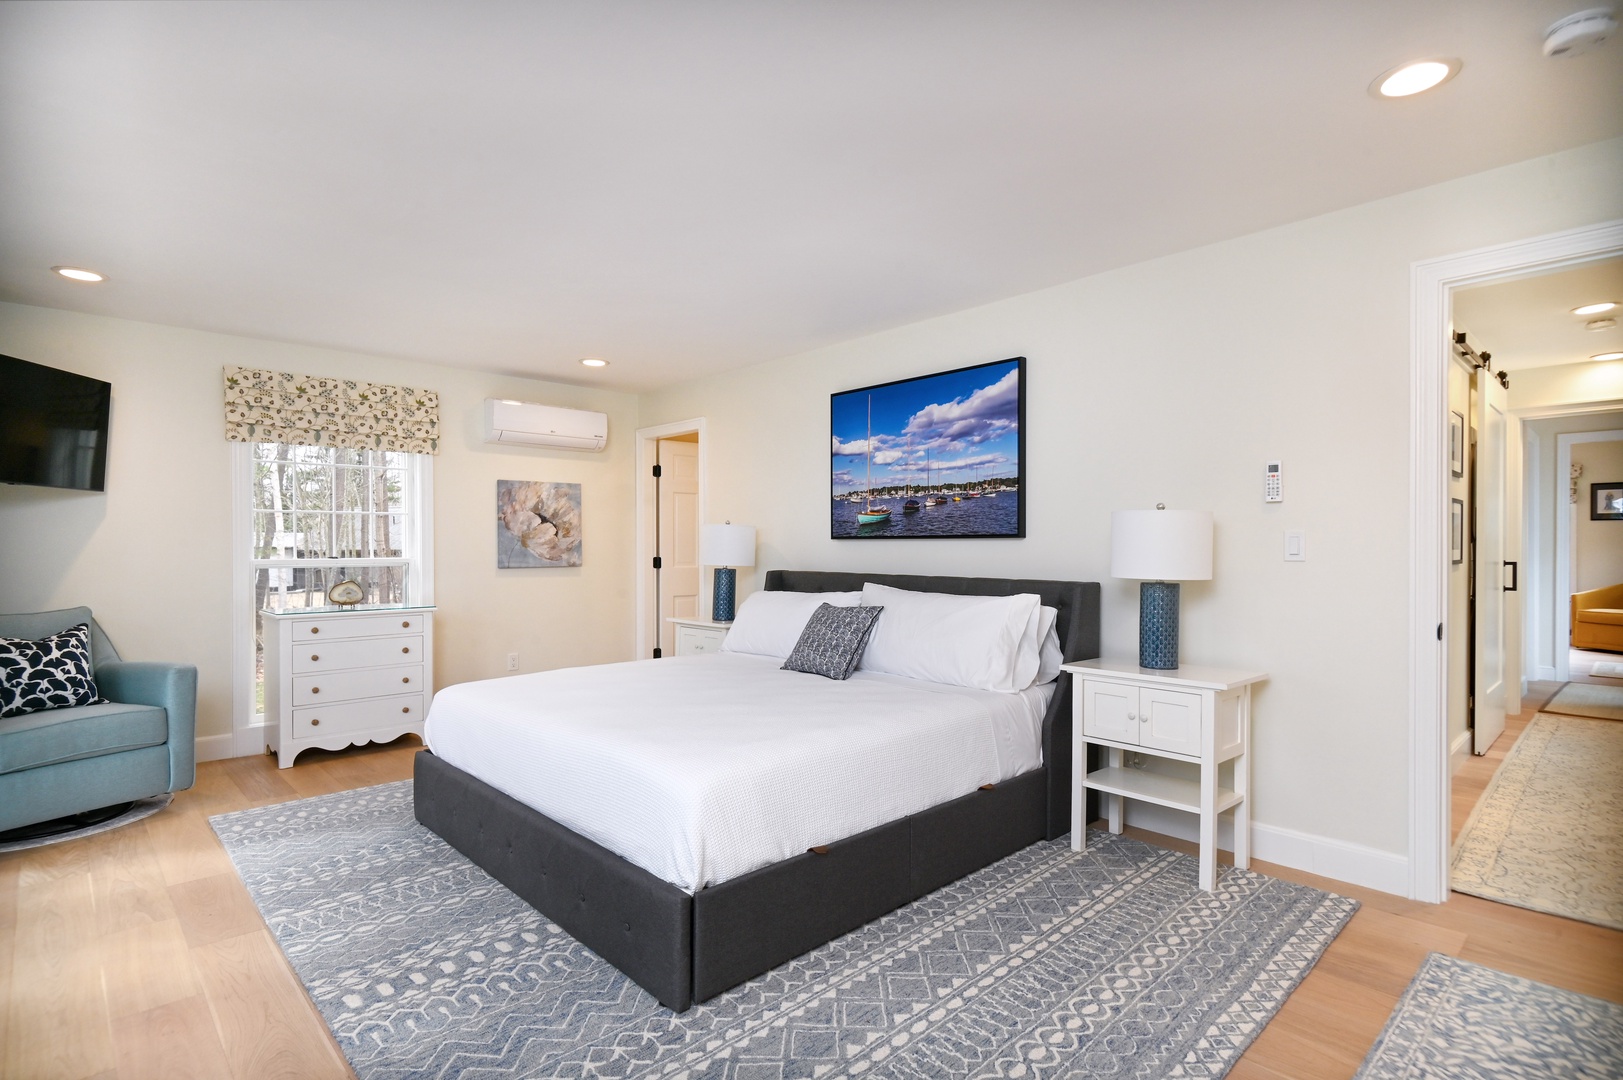 Harbor View’s breezy studio boasts a plush king bed, ensuite, TV, & cozy kitchenette